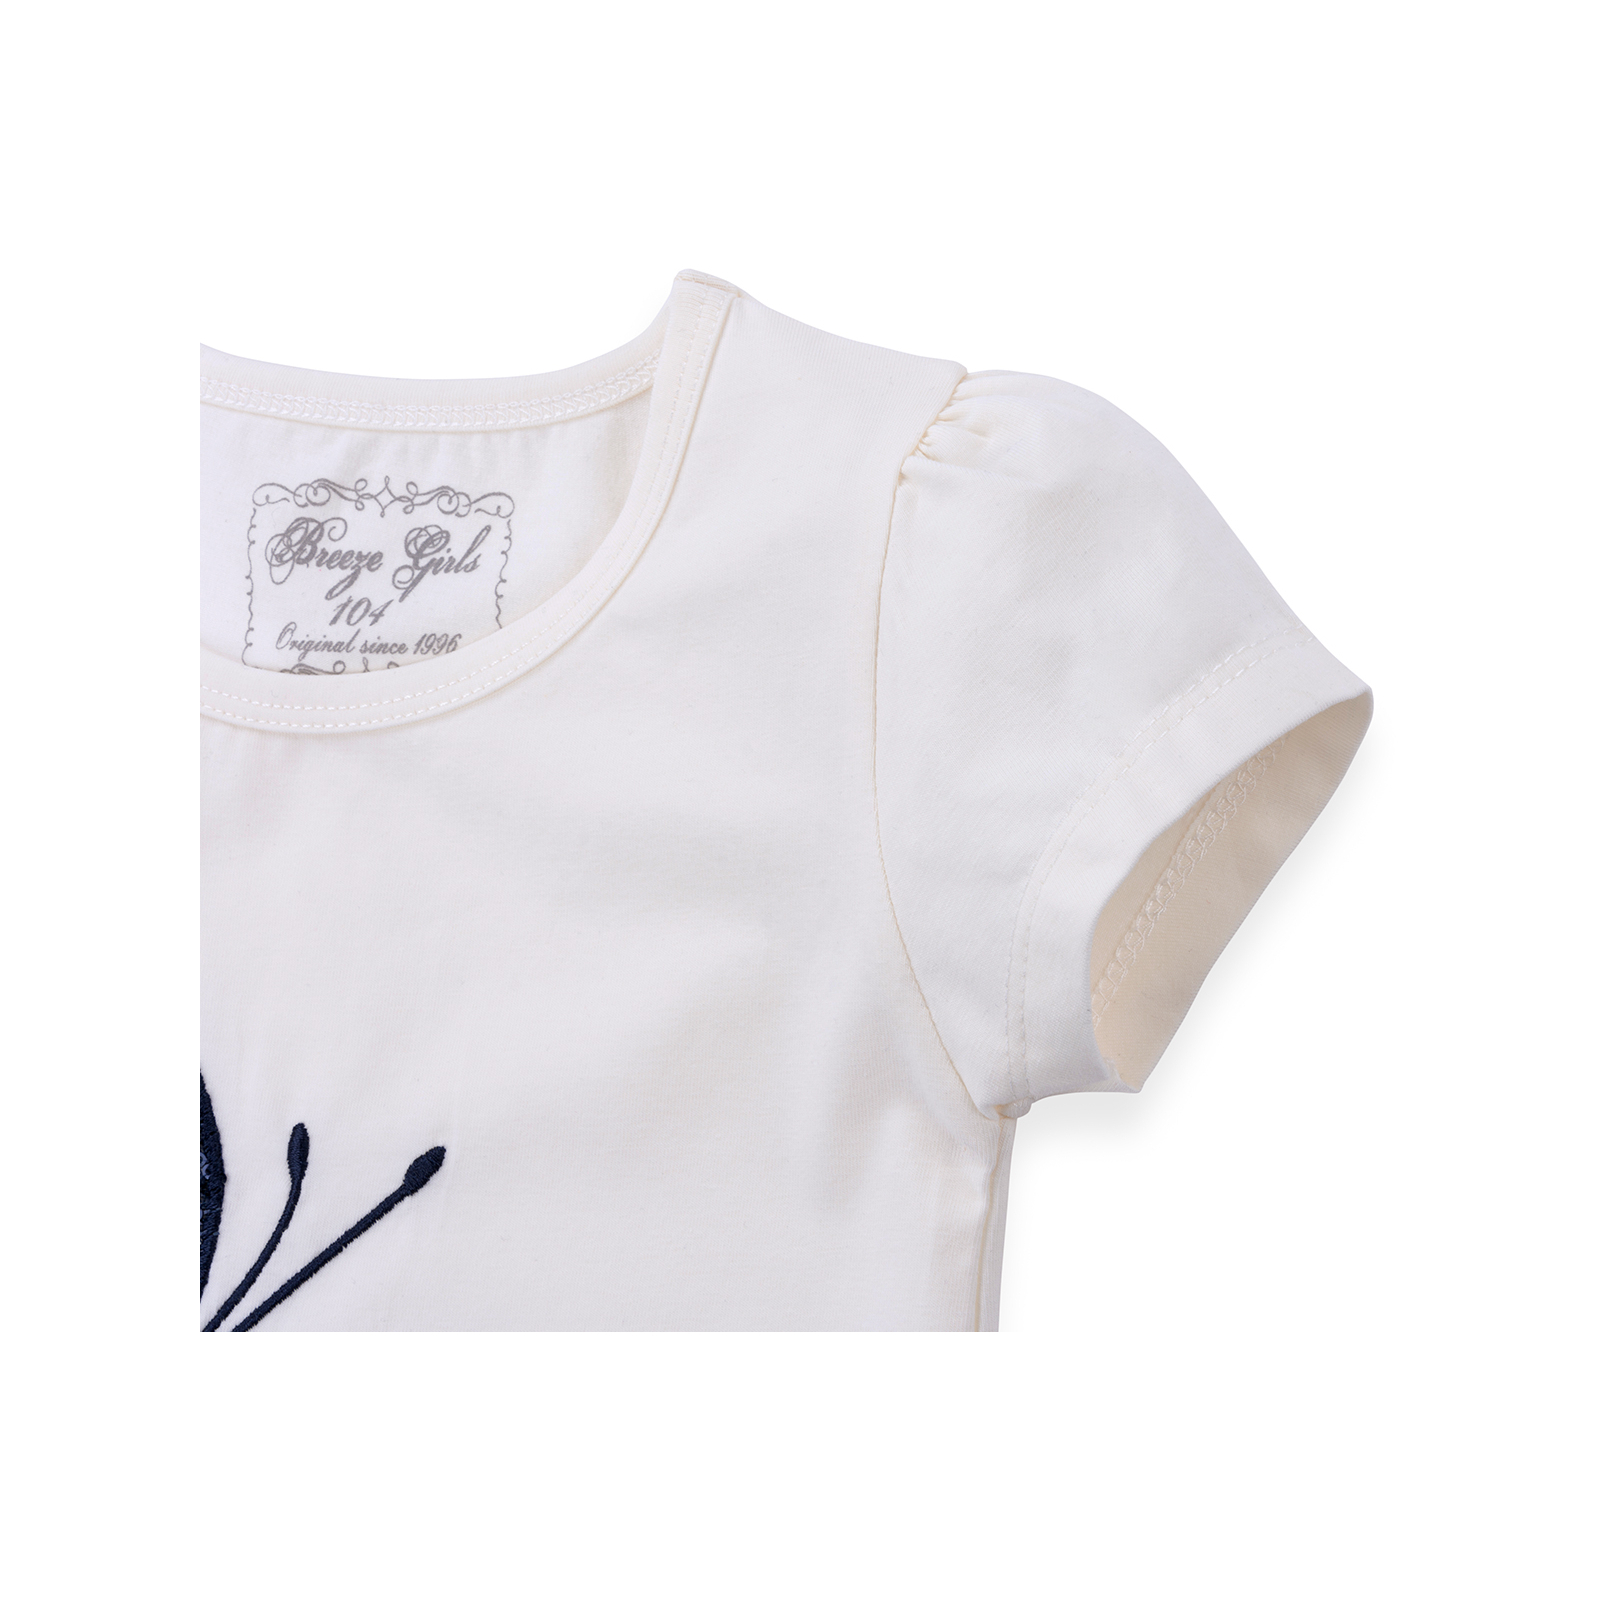 Набір дитячого одягу Breeze футболка с бабочкой со штанишками (8969-104G-cream) зображення 5